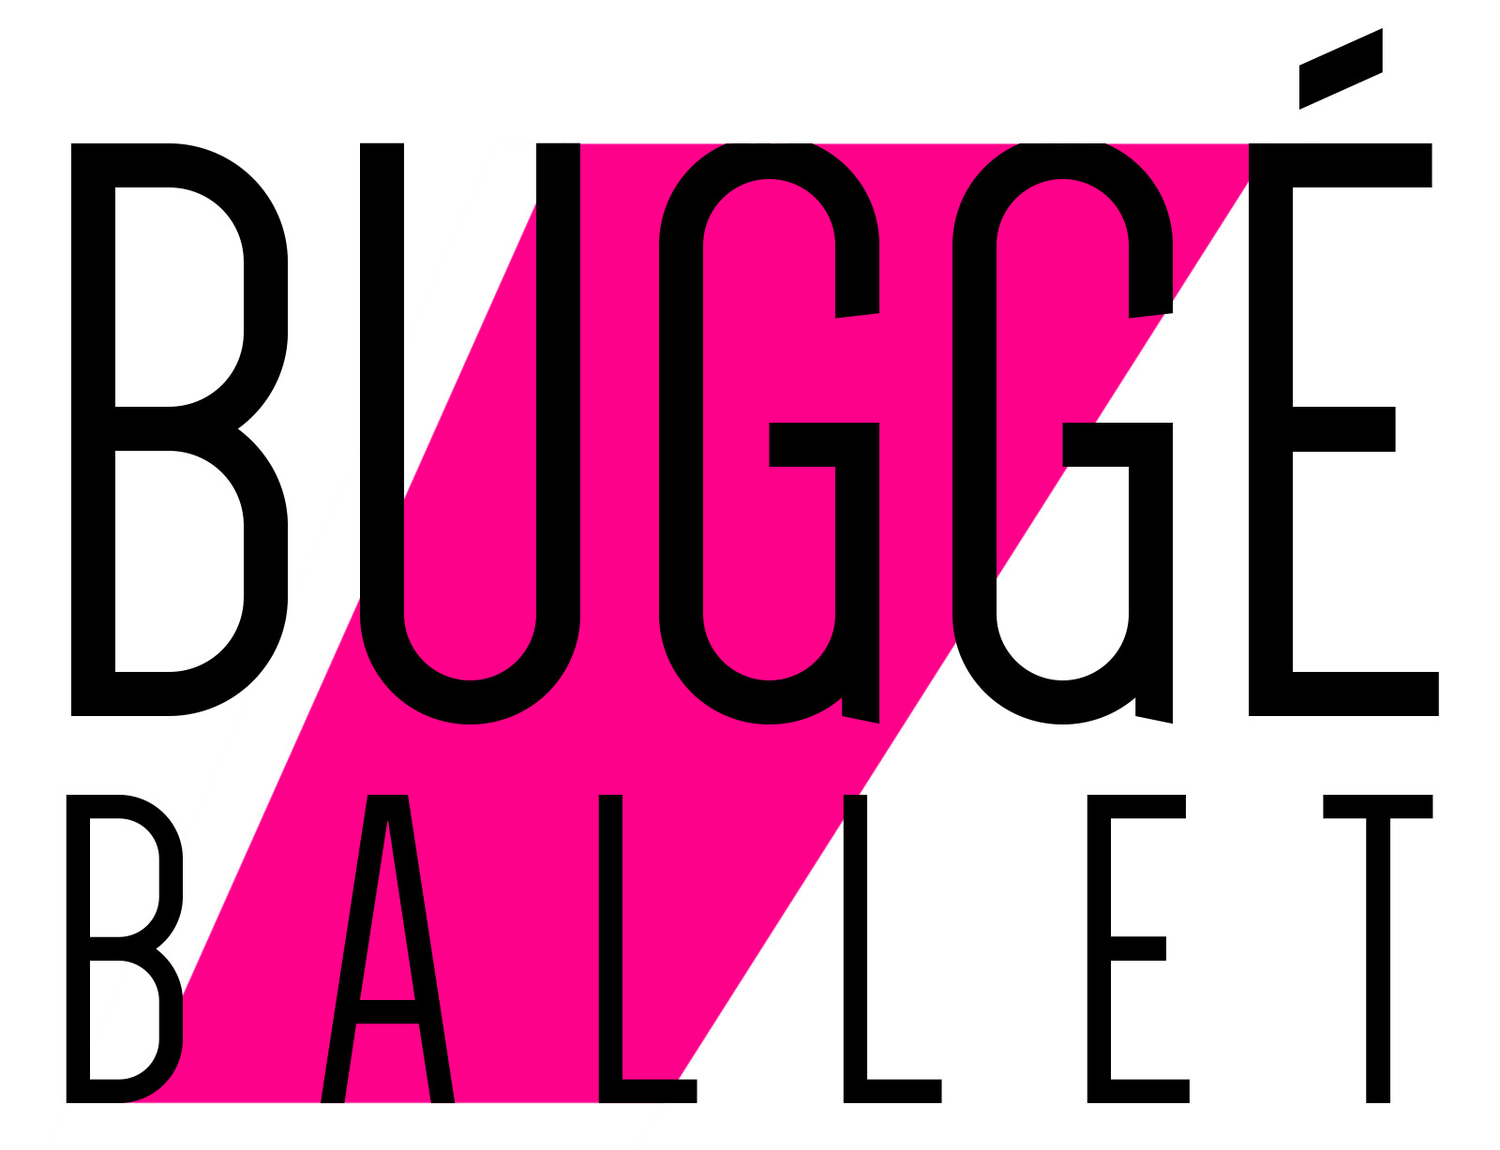 Welcome to Buggé Ballet